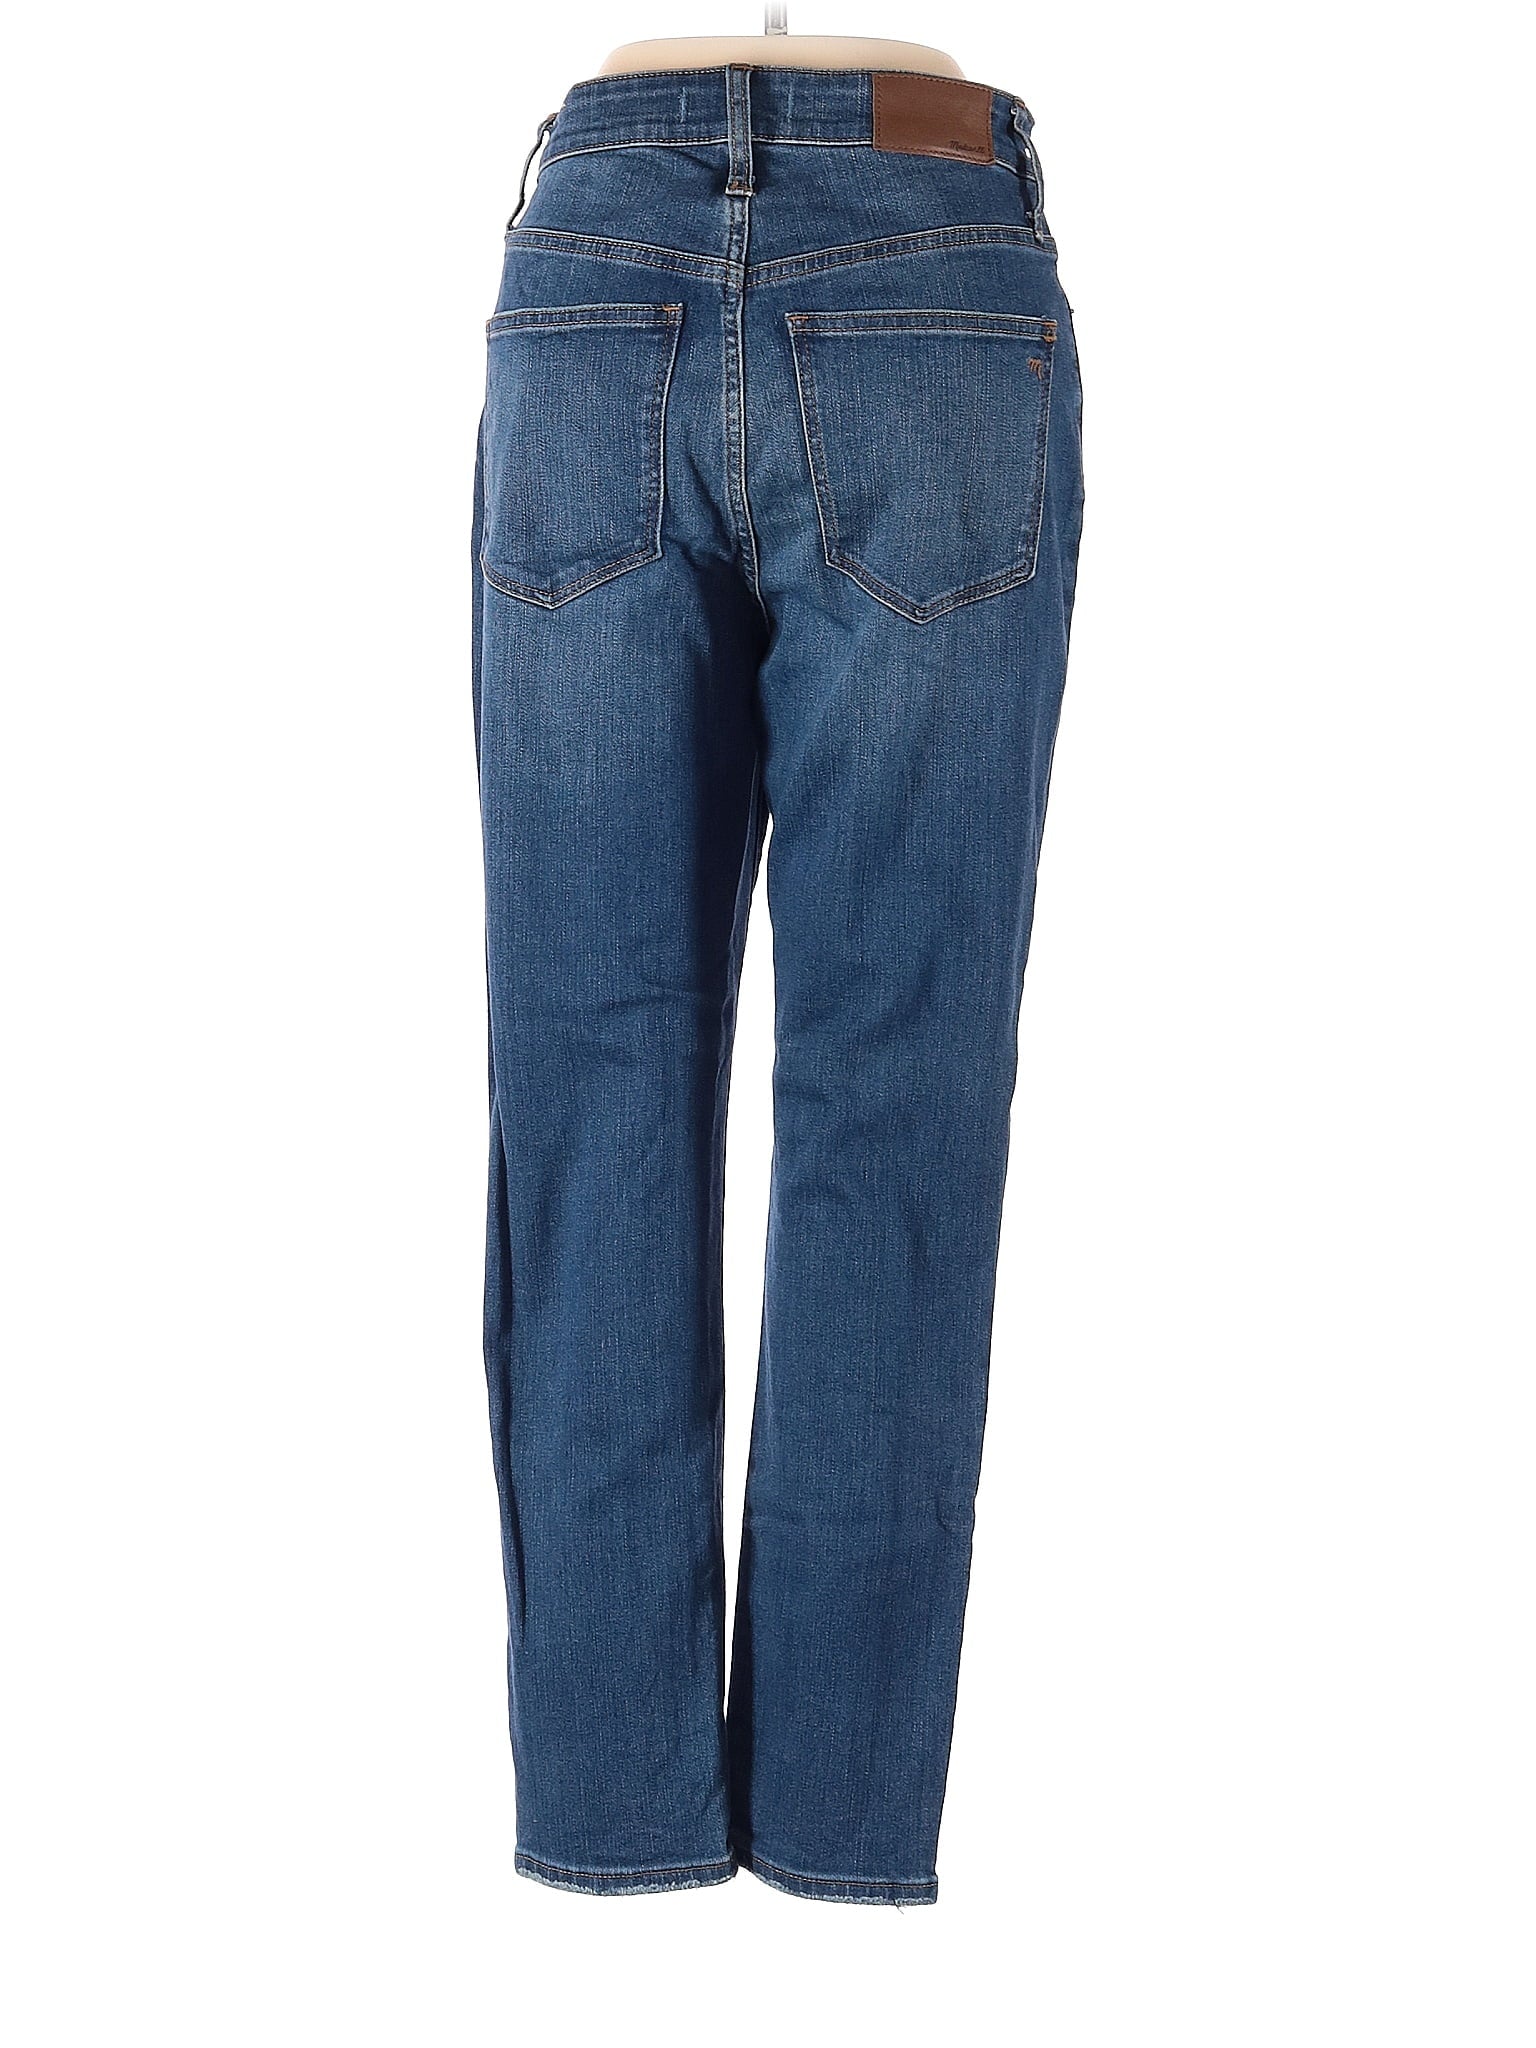 High-Rise Curvy High-Rise Skinny Crop Jeans In Lander Wash waist size - 25